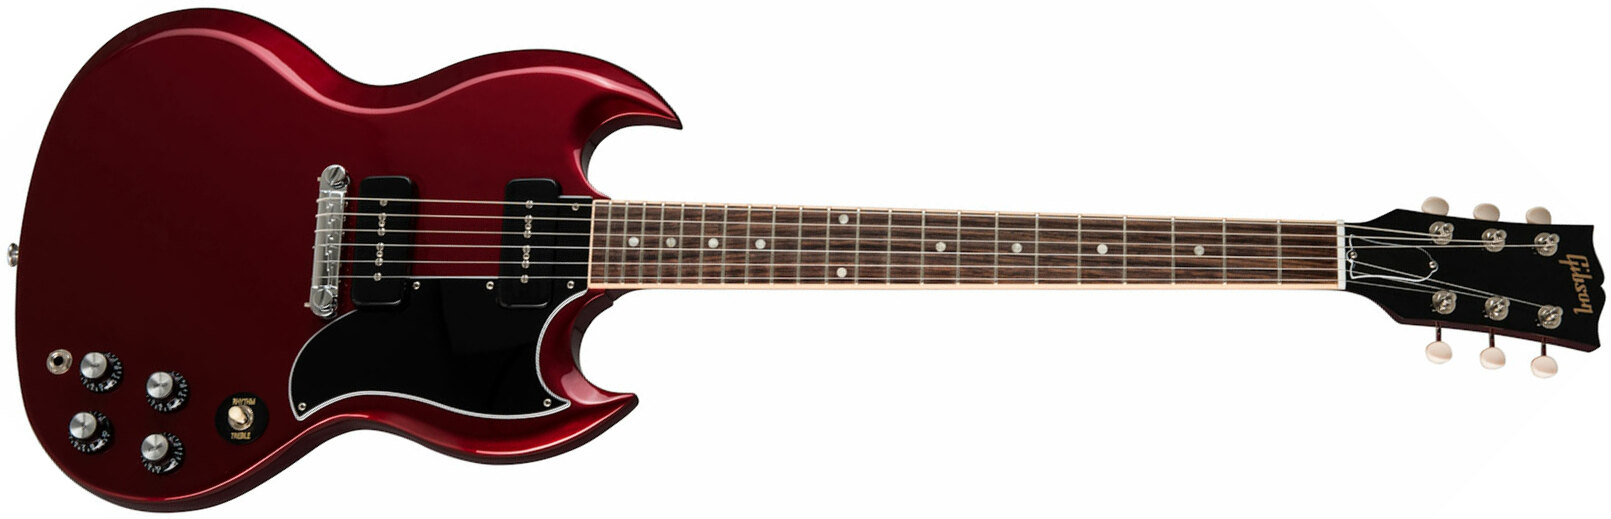 Gibson Sp Special Original 2p90 Ht Rw - Vintage Sparkling Burgundy - Retro-rock elektrische gitaar - Main picture